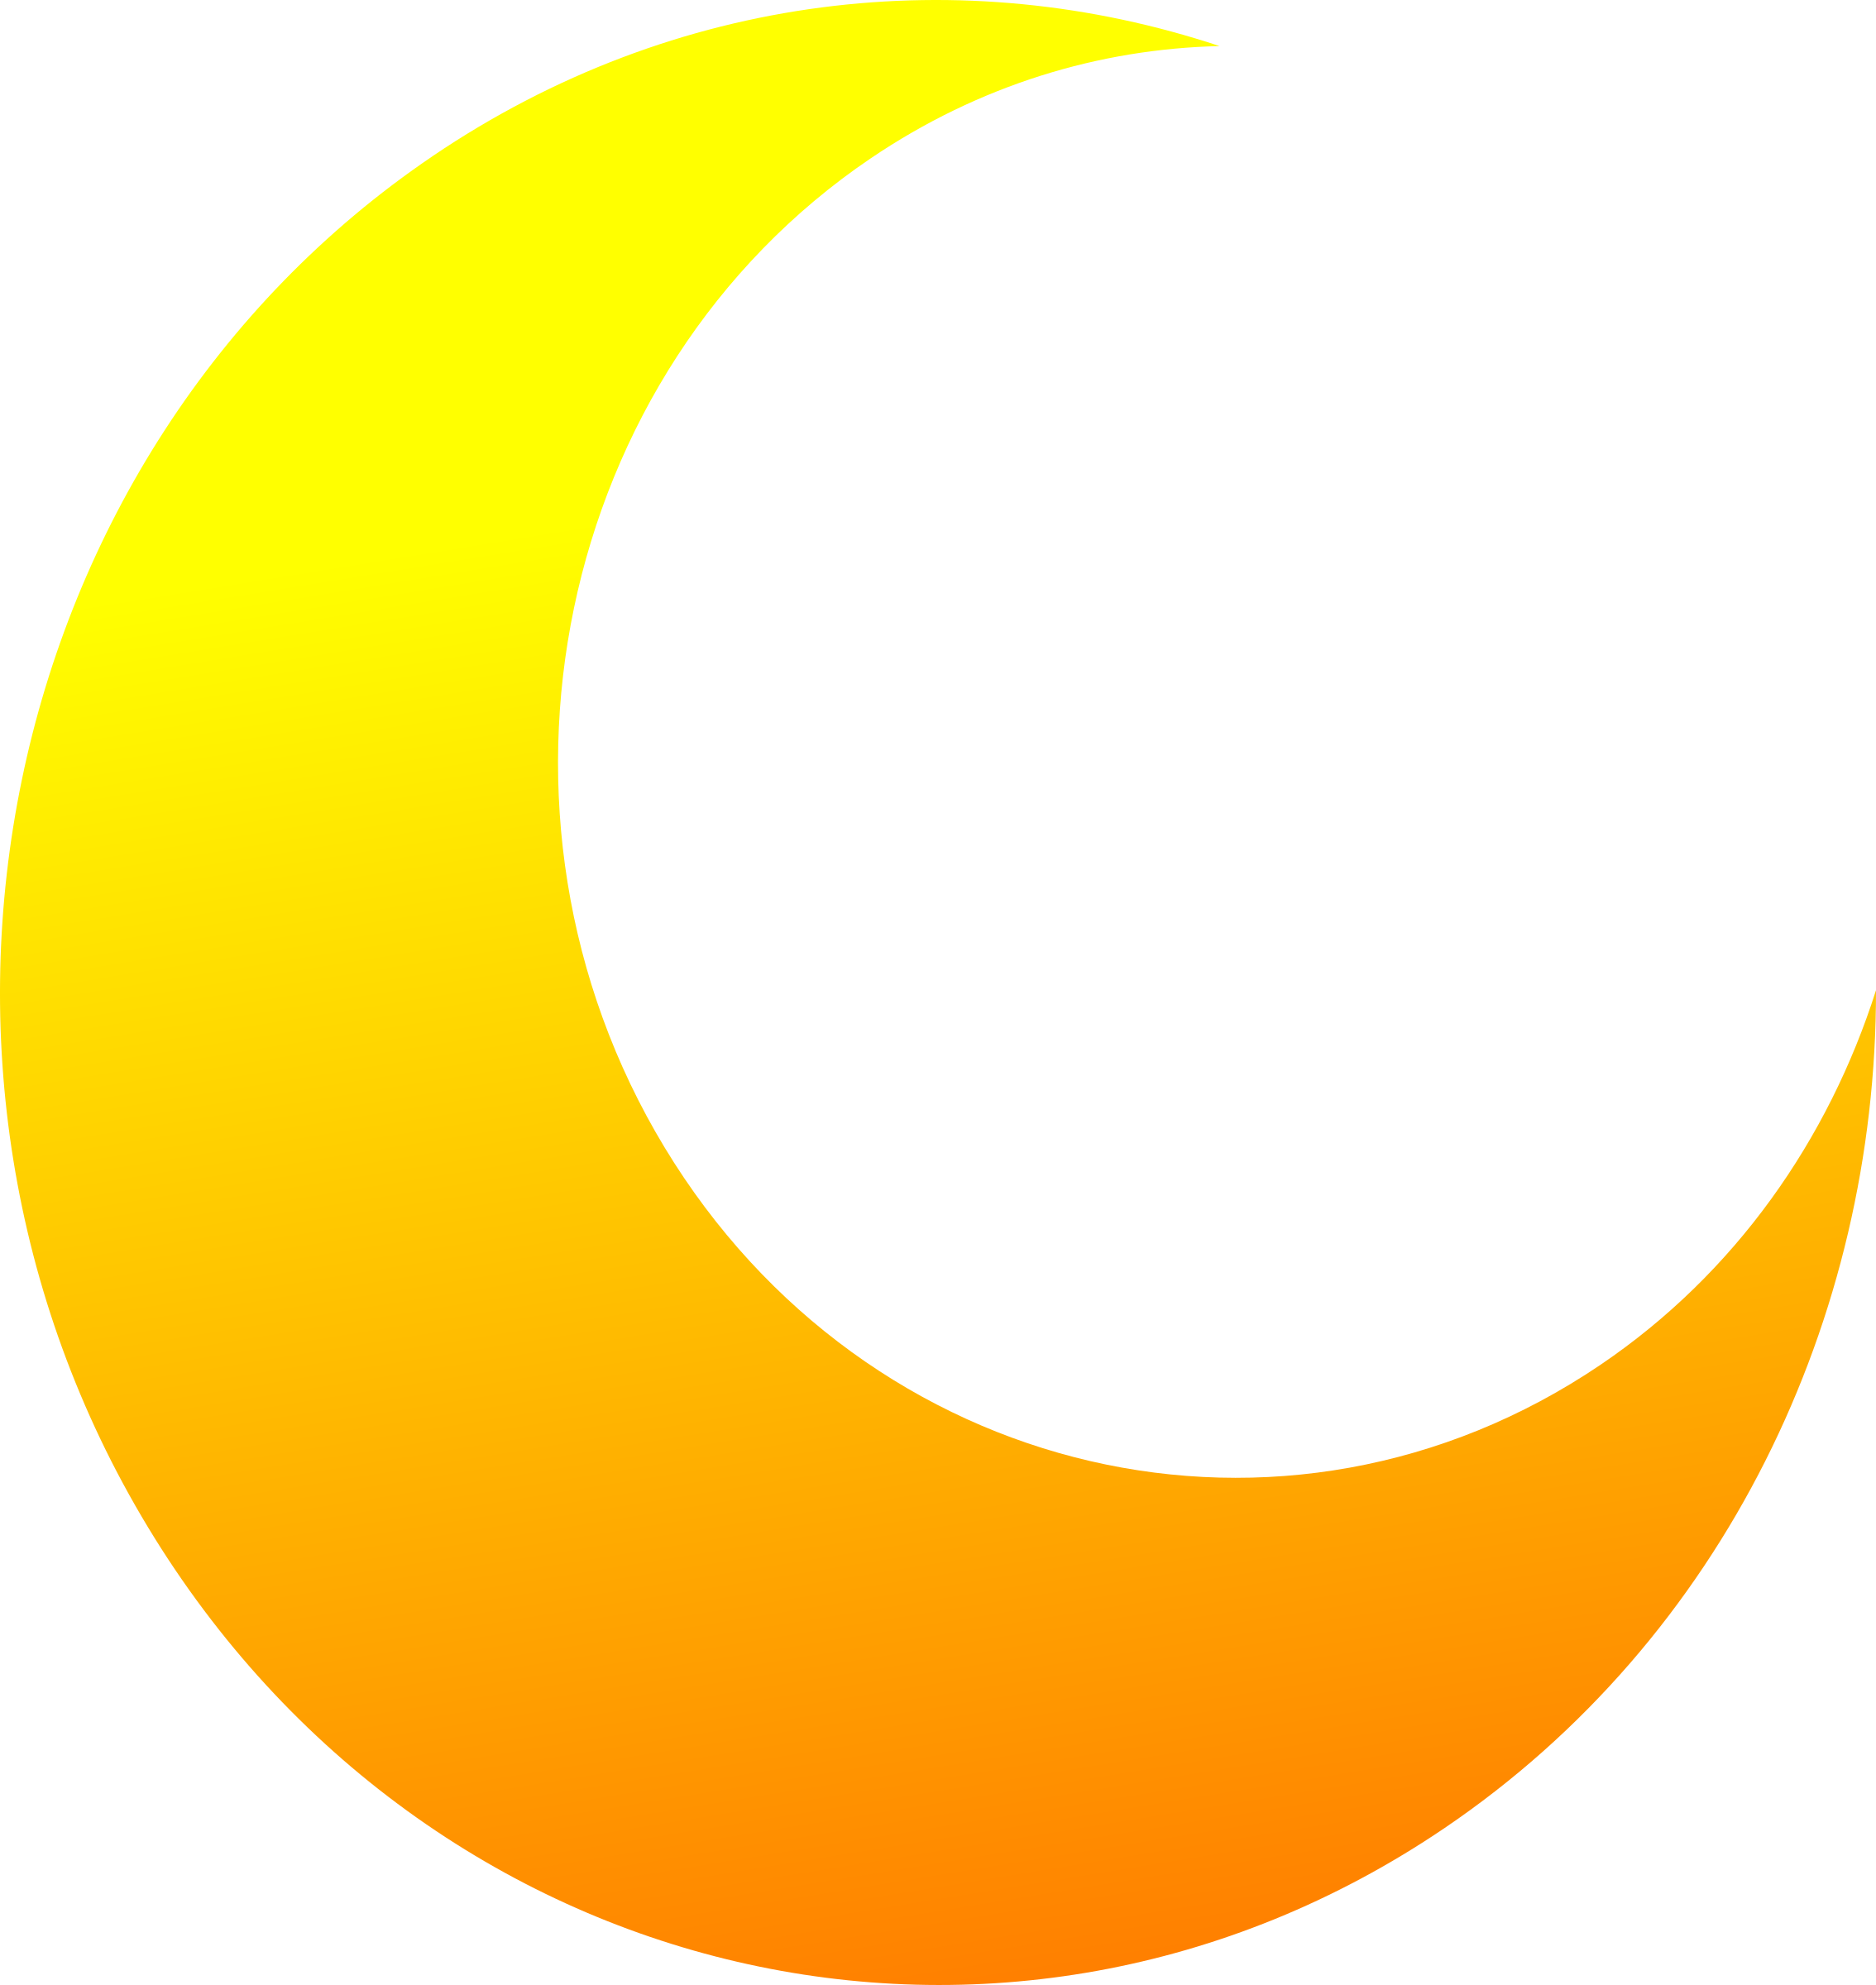 Yellow Crescent Half Moon Vector Clipart image - Free stock photo